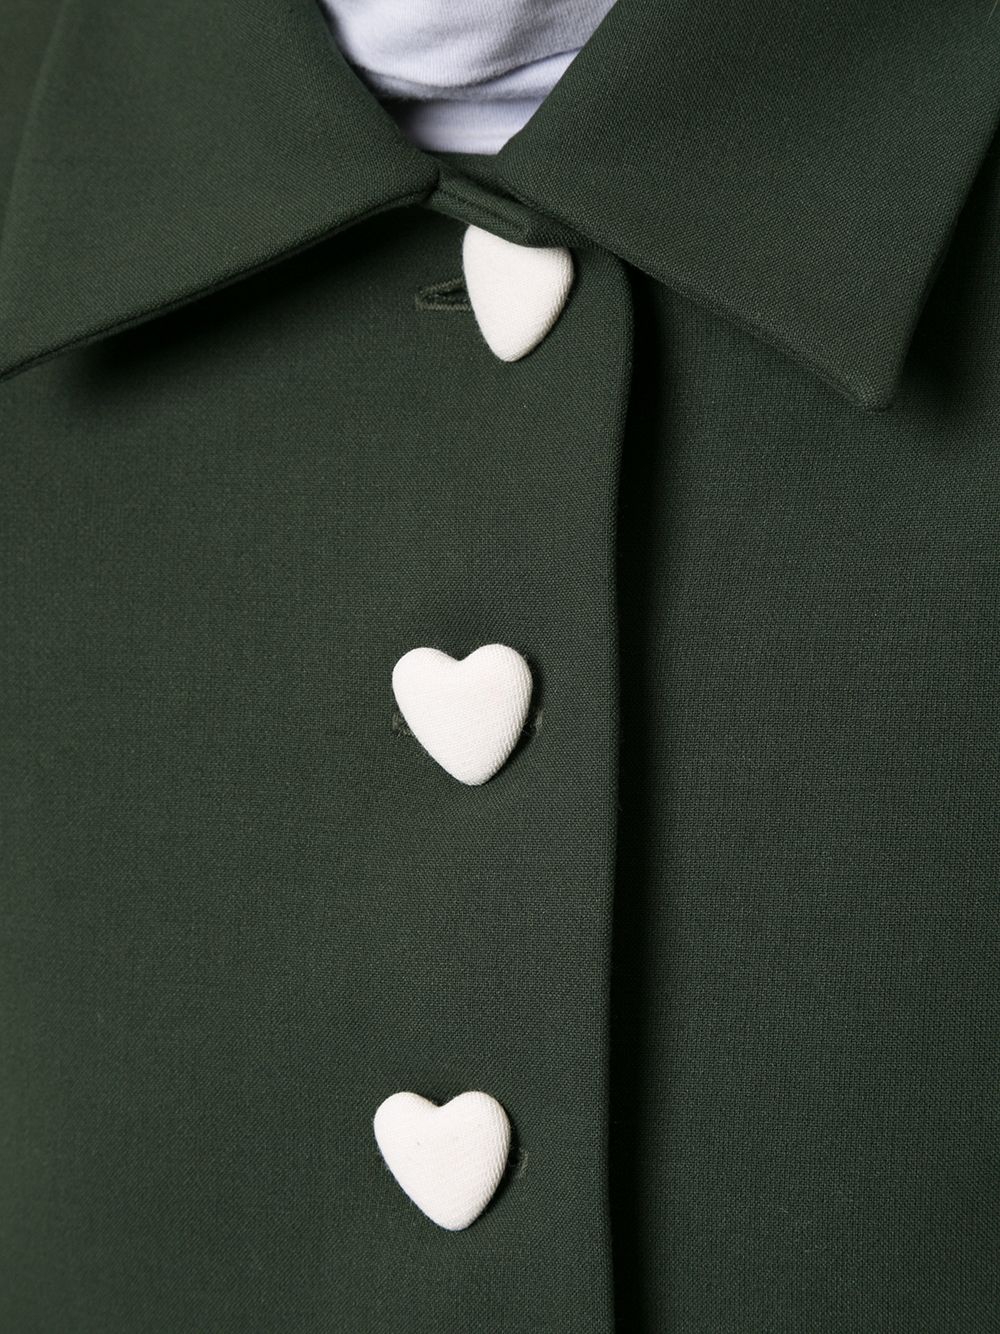 фото George keburia жакет с пуговицами в форме сердца